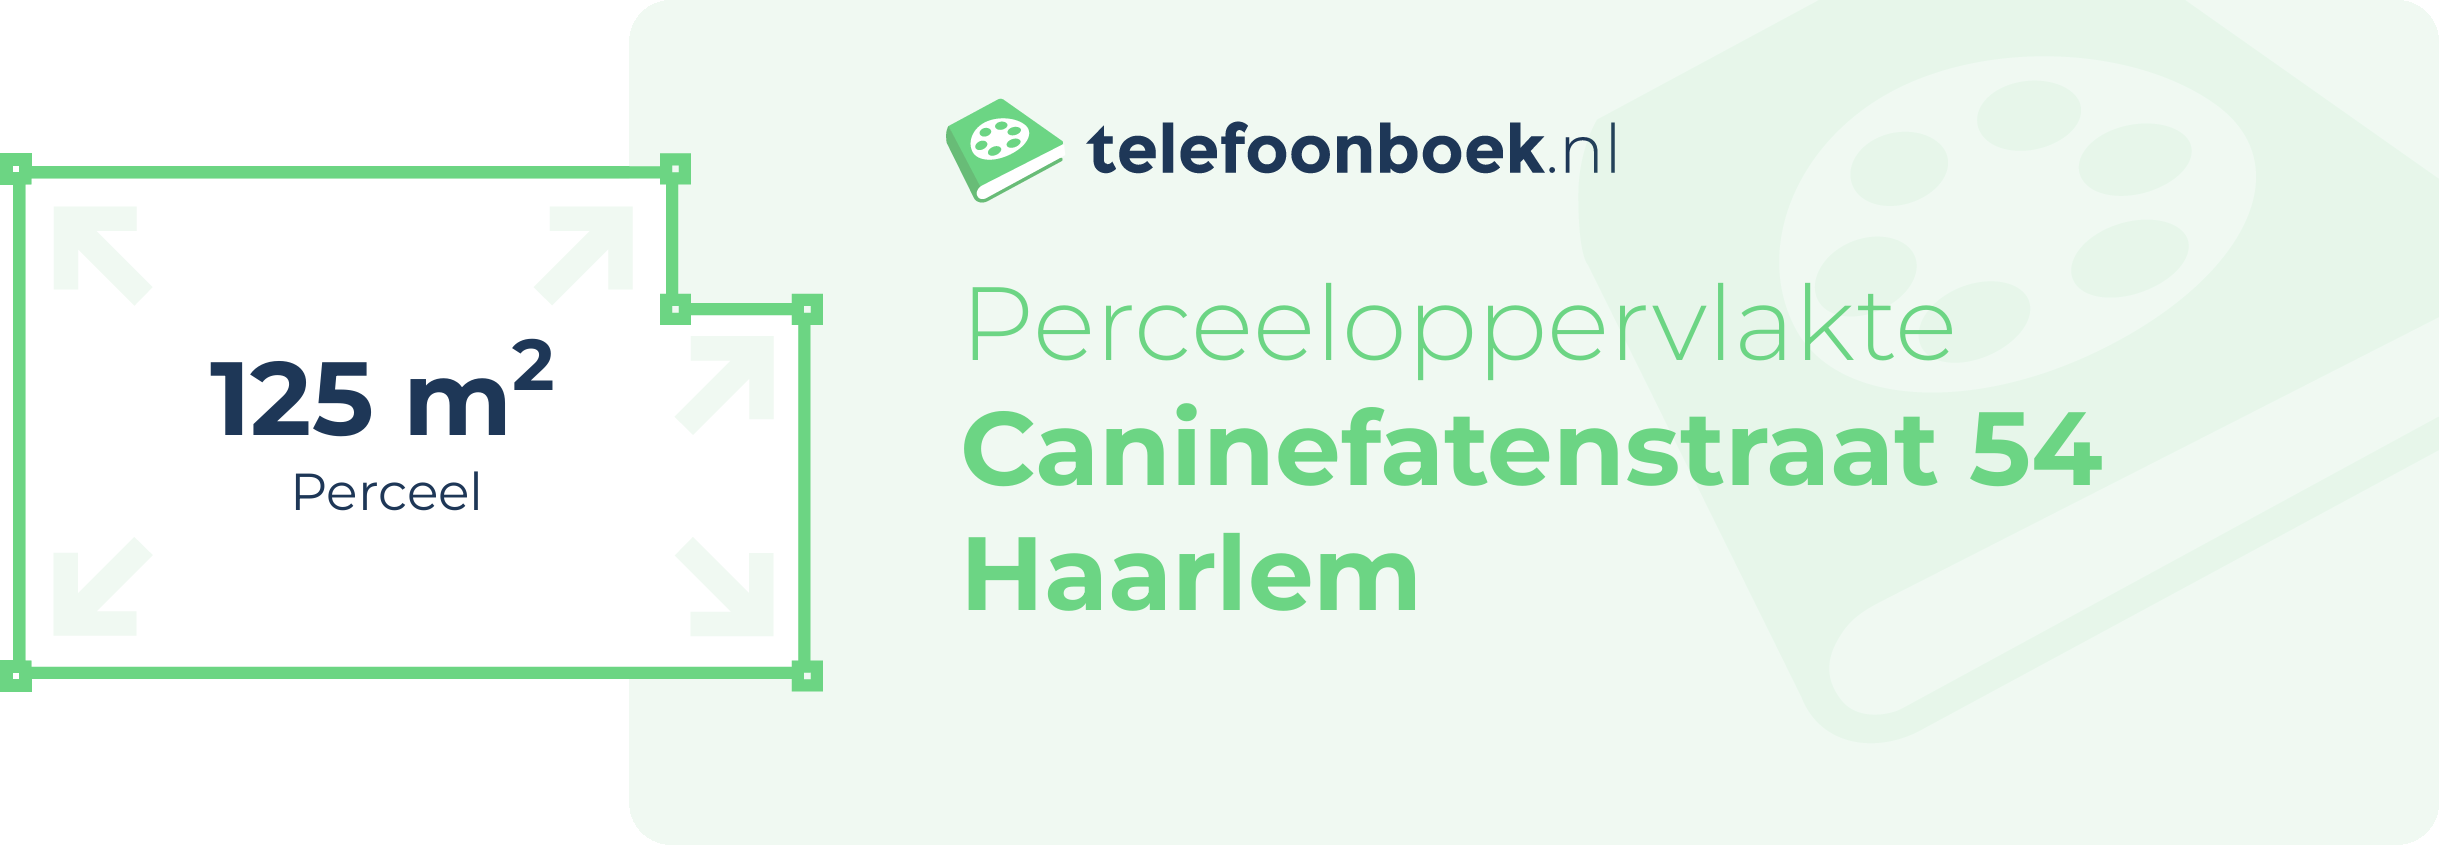 Perceeloppervlakte Caninefatenstraat 54 Haarlem